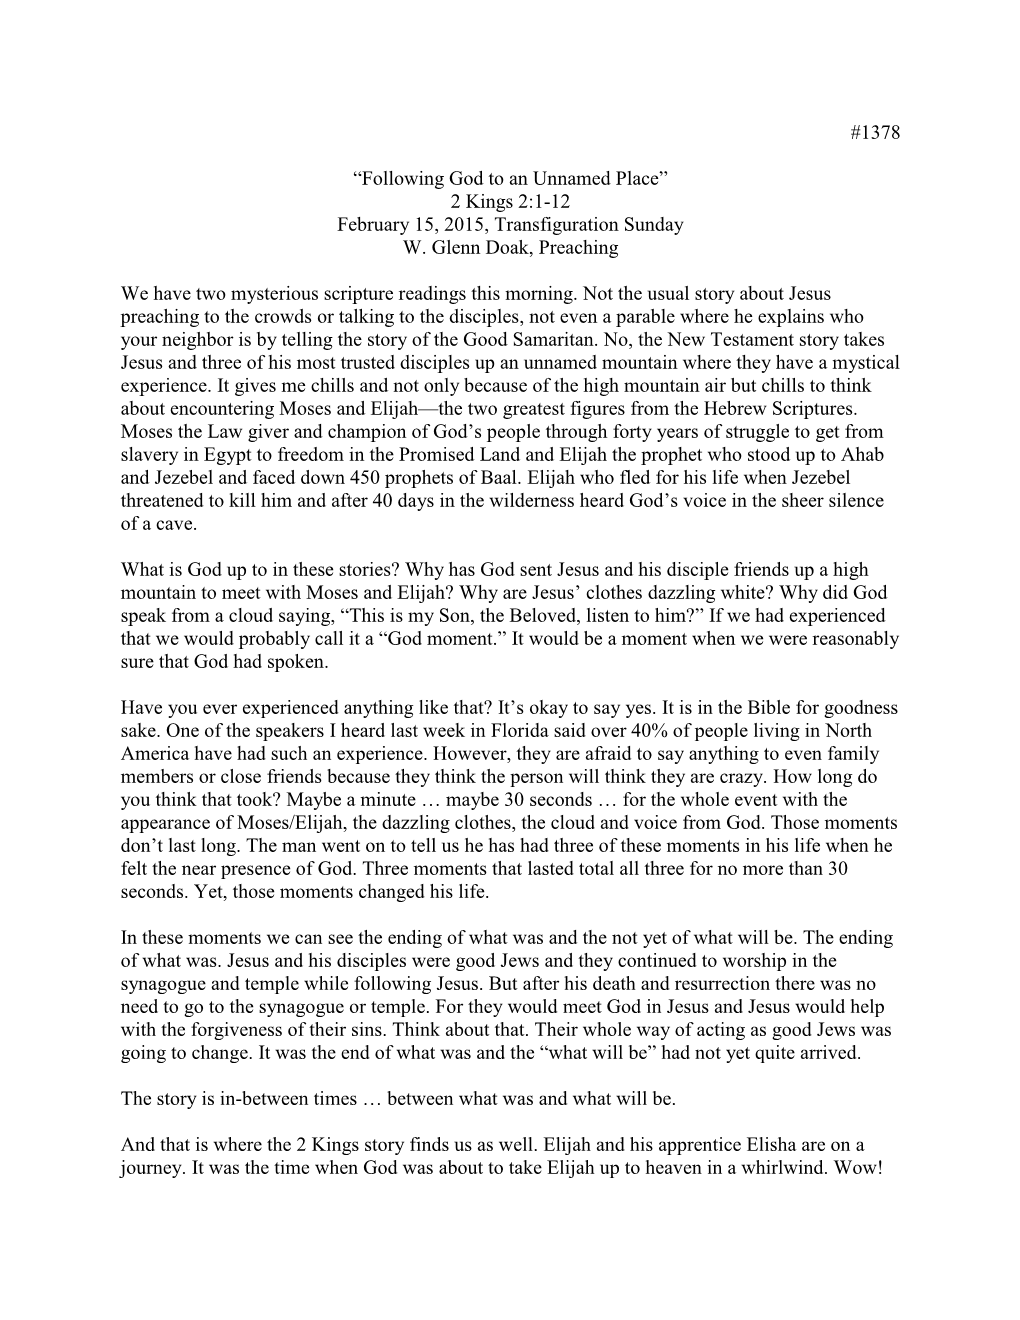 2 Kings 2:1-12 February 15, 2015, Transfiguration Sunday W. Glenn Doak, Preaching